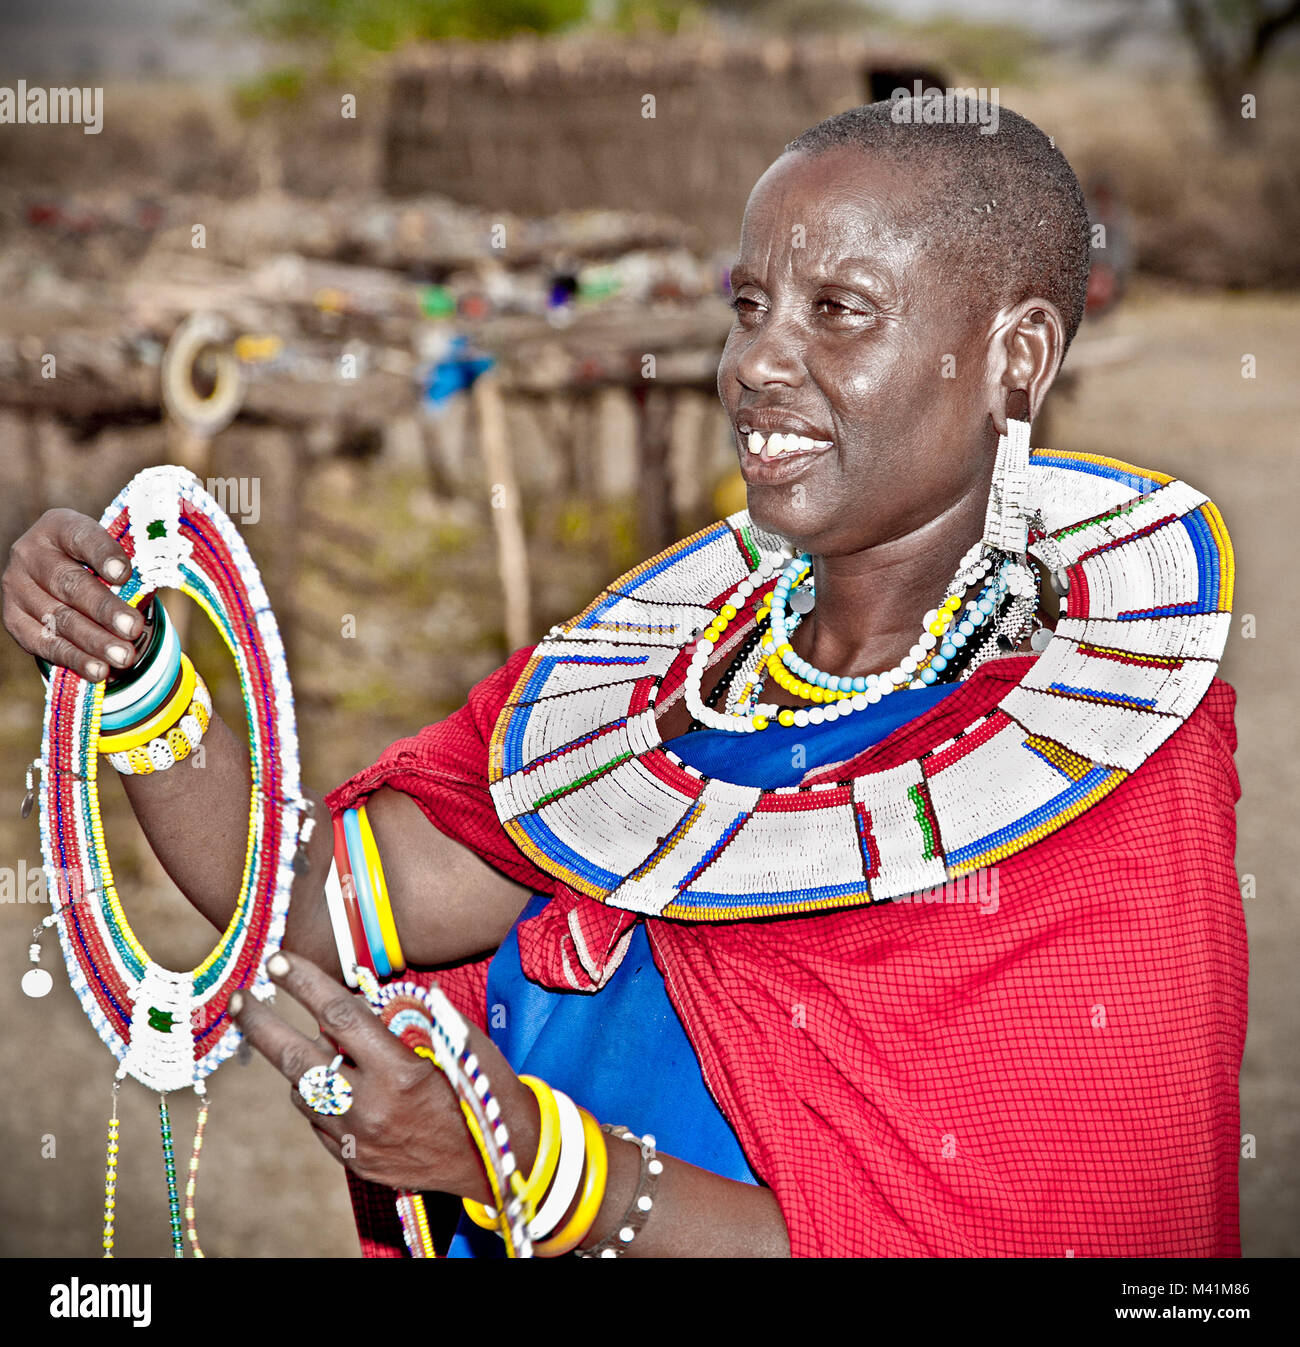 Pin on Maasai Attire and Ornaments